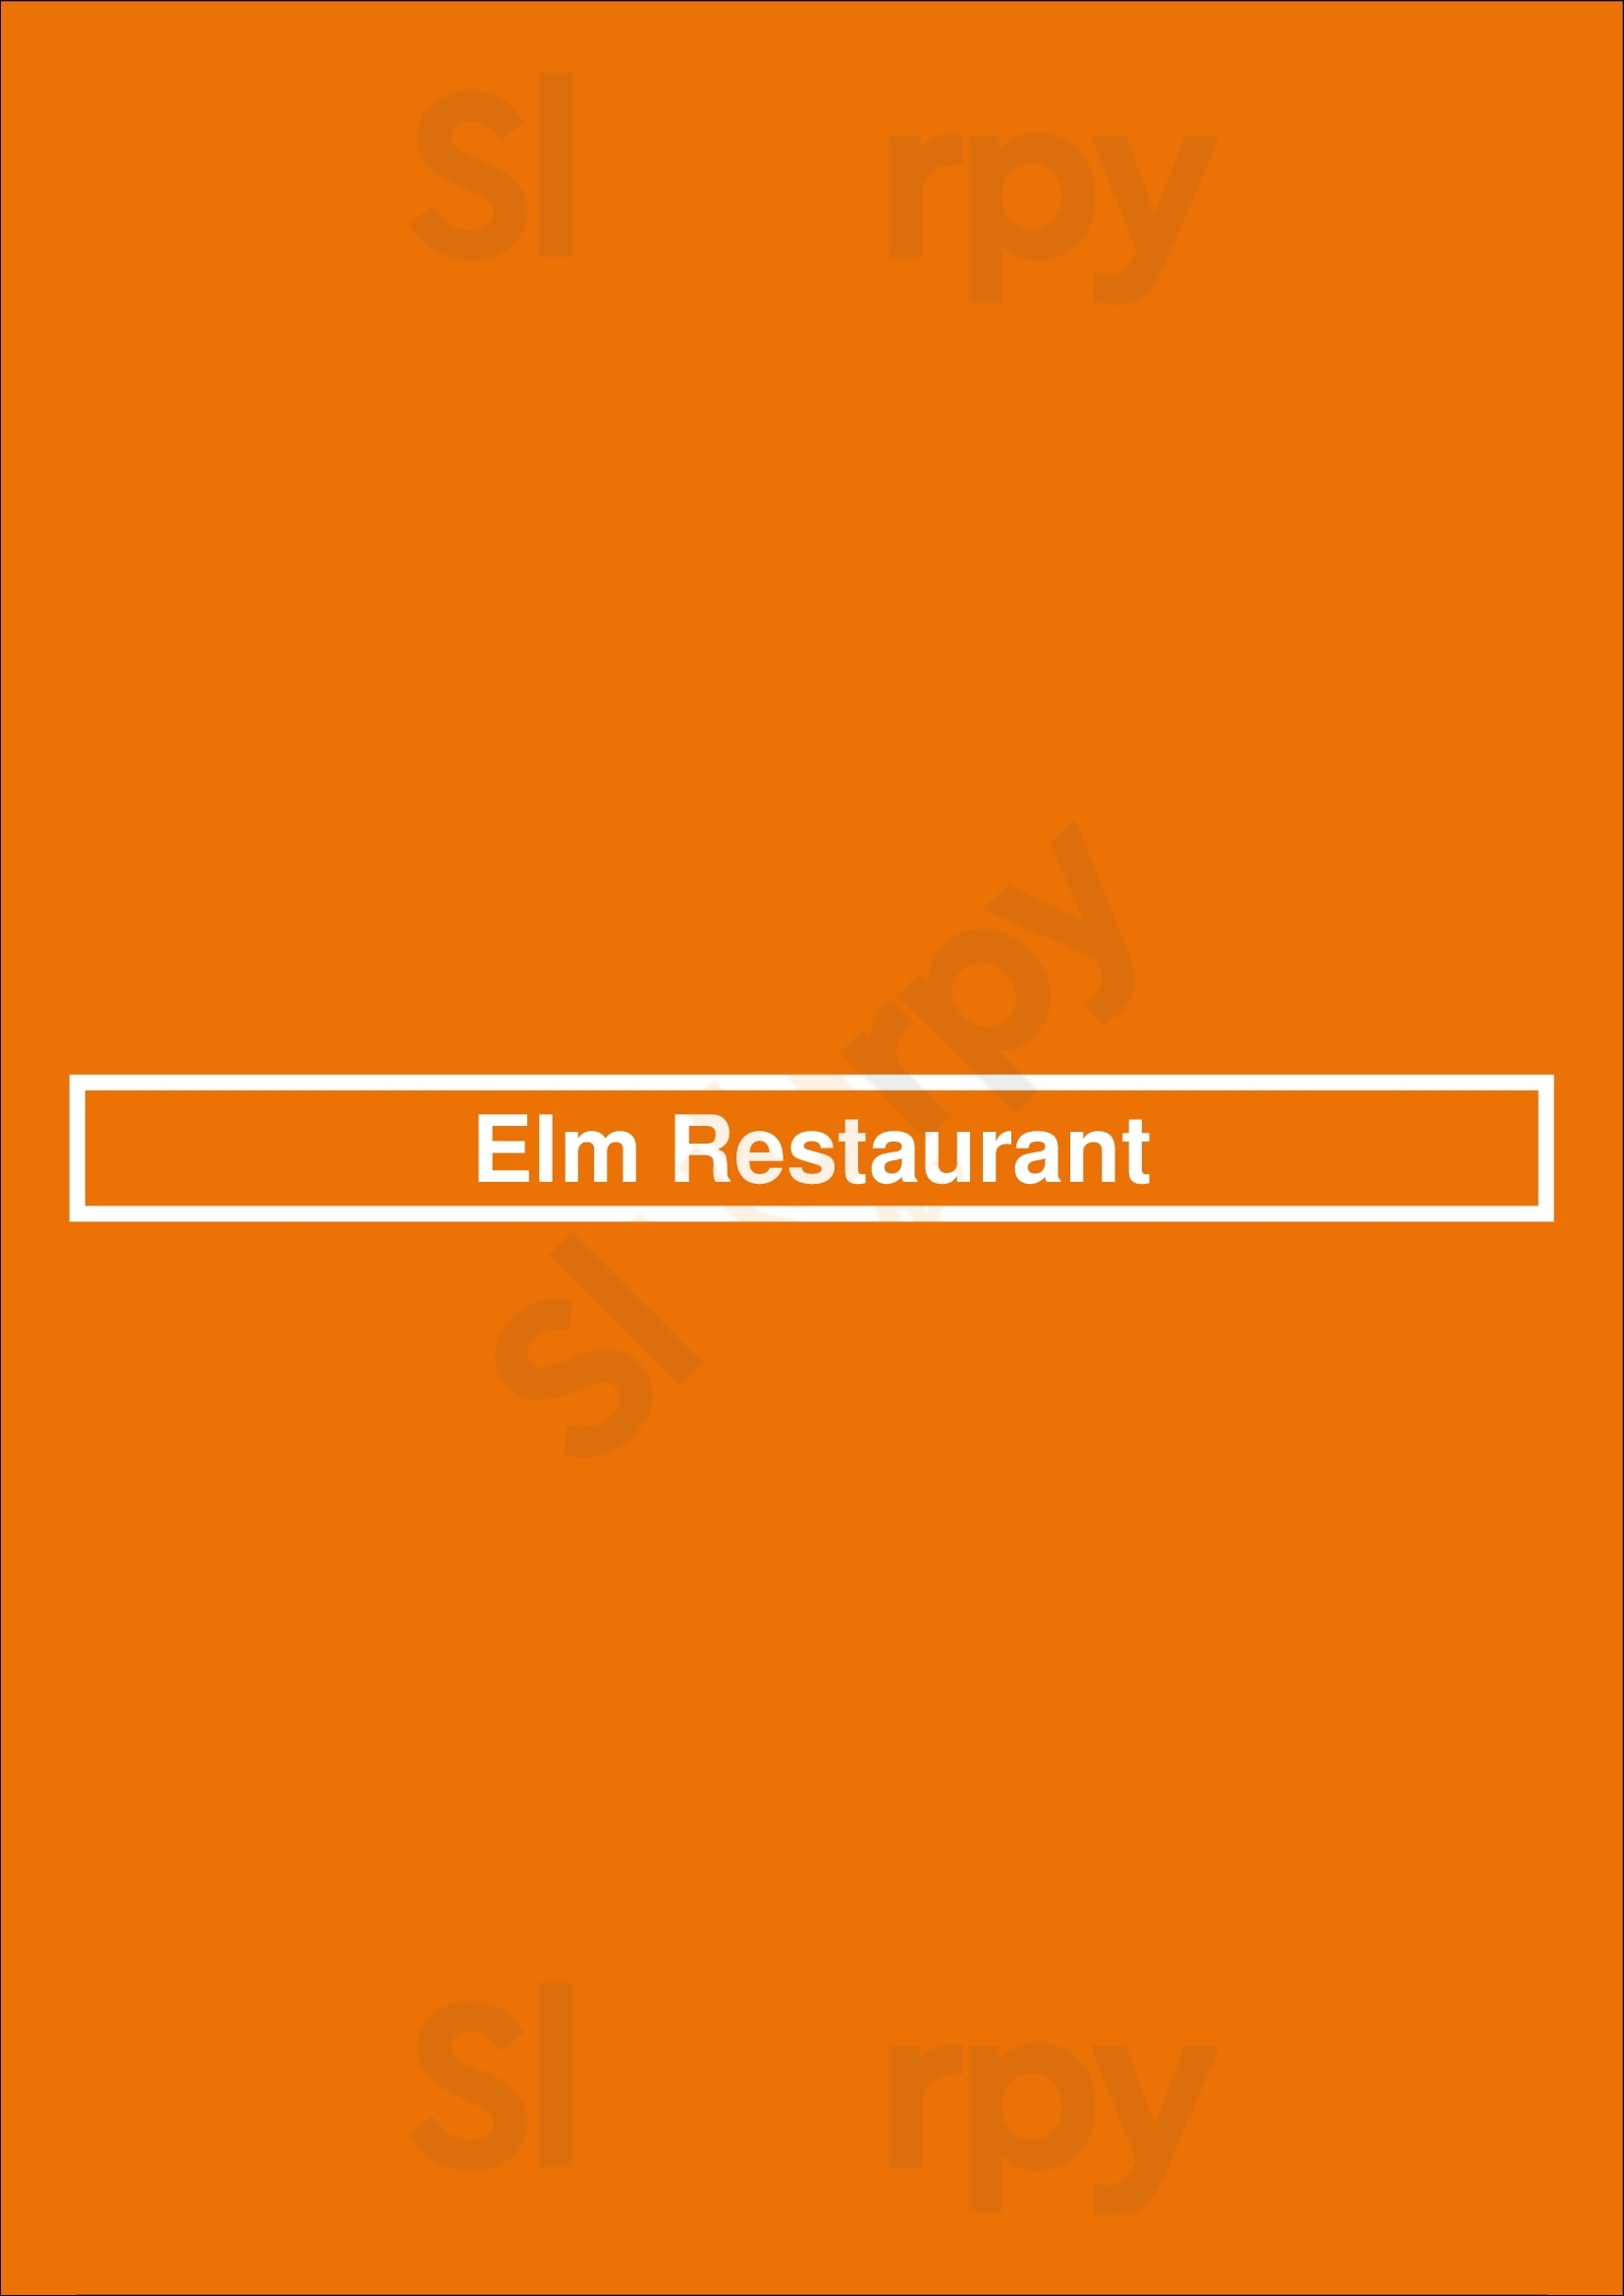 Elm Restaurant New Canaan Menu - 1